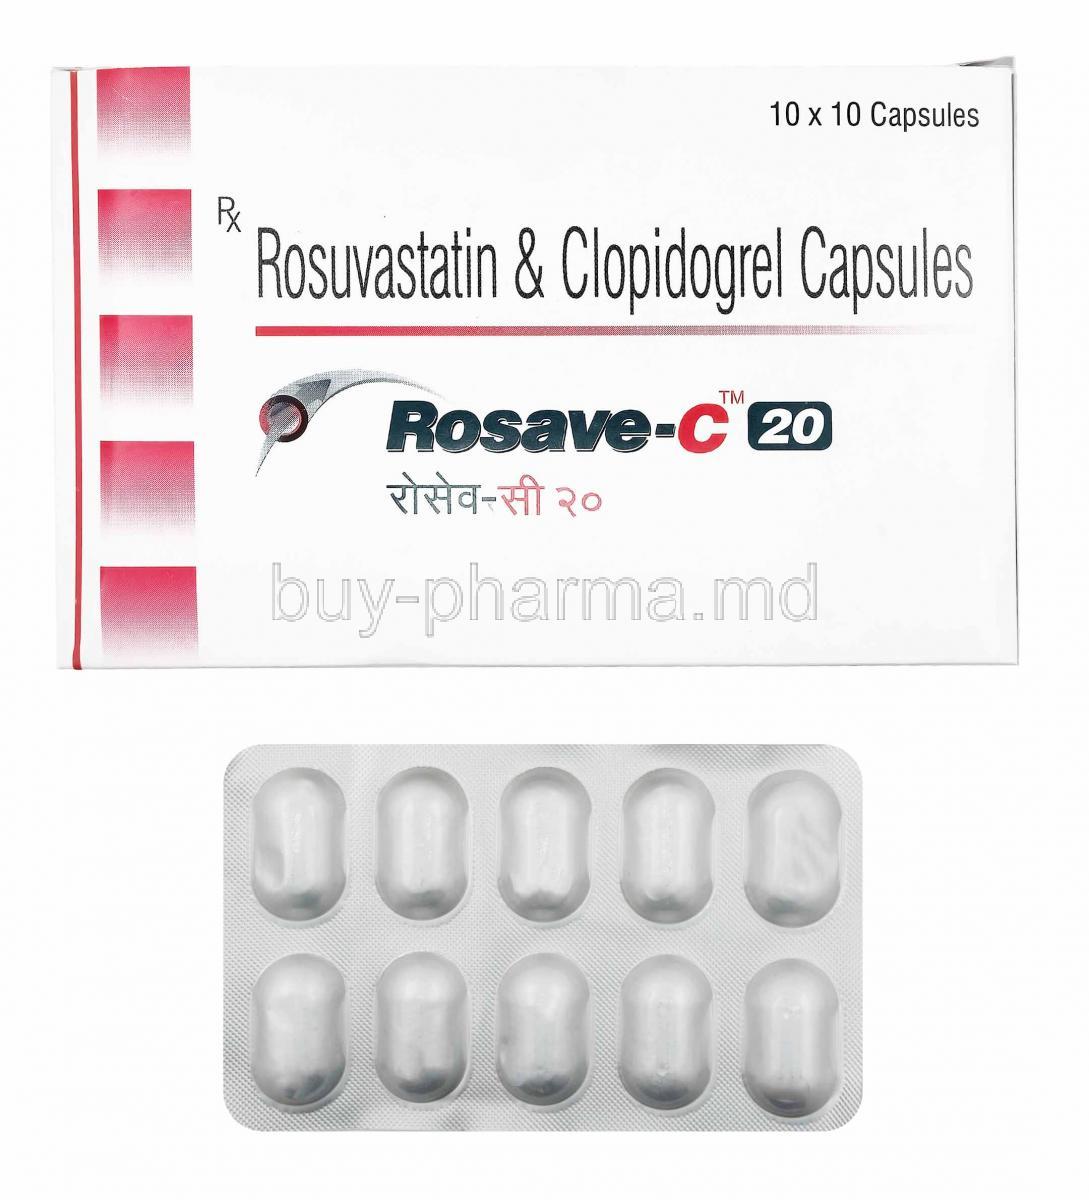 Rosave-C, Rosuvastatin and Clopidogrel 20mg box and capsules